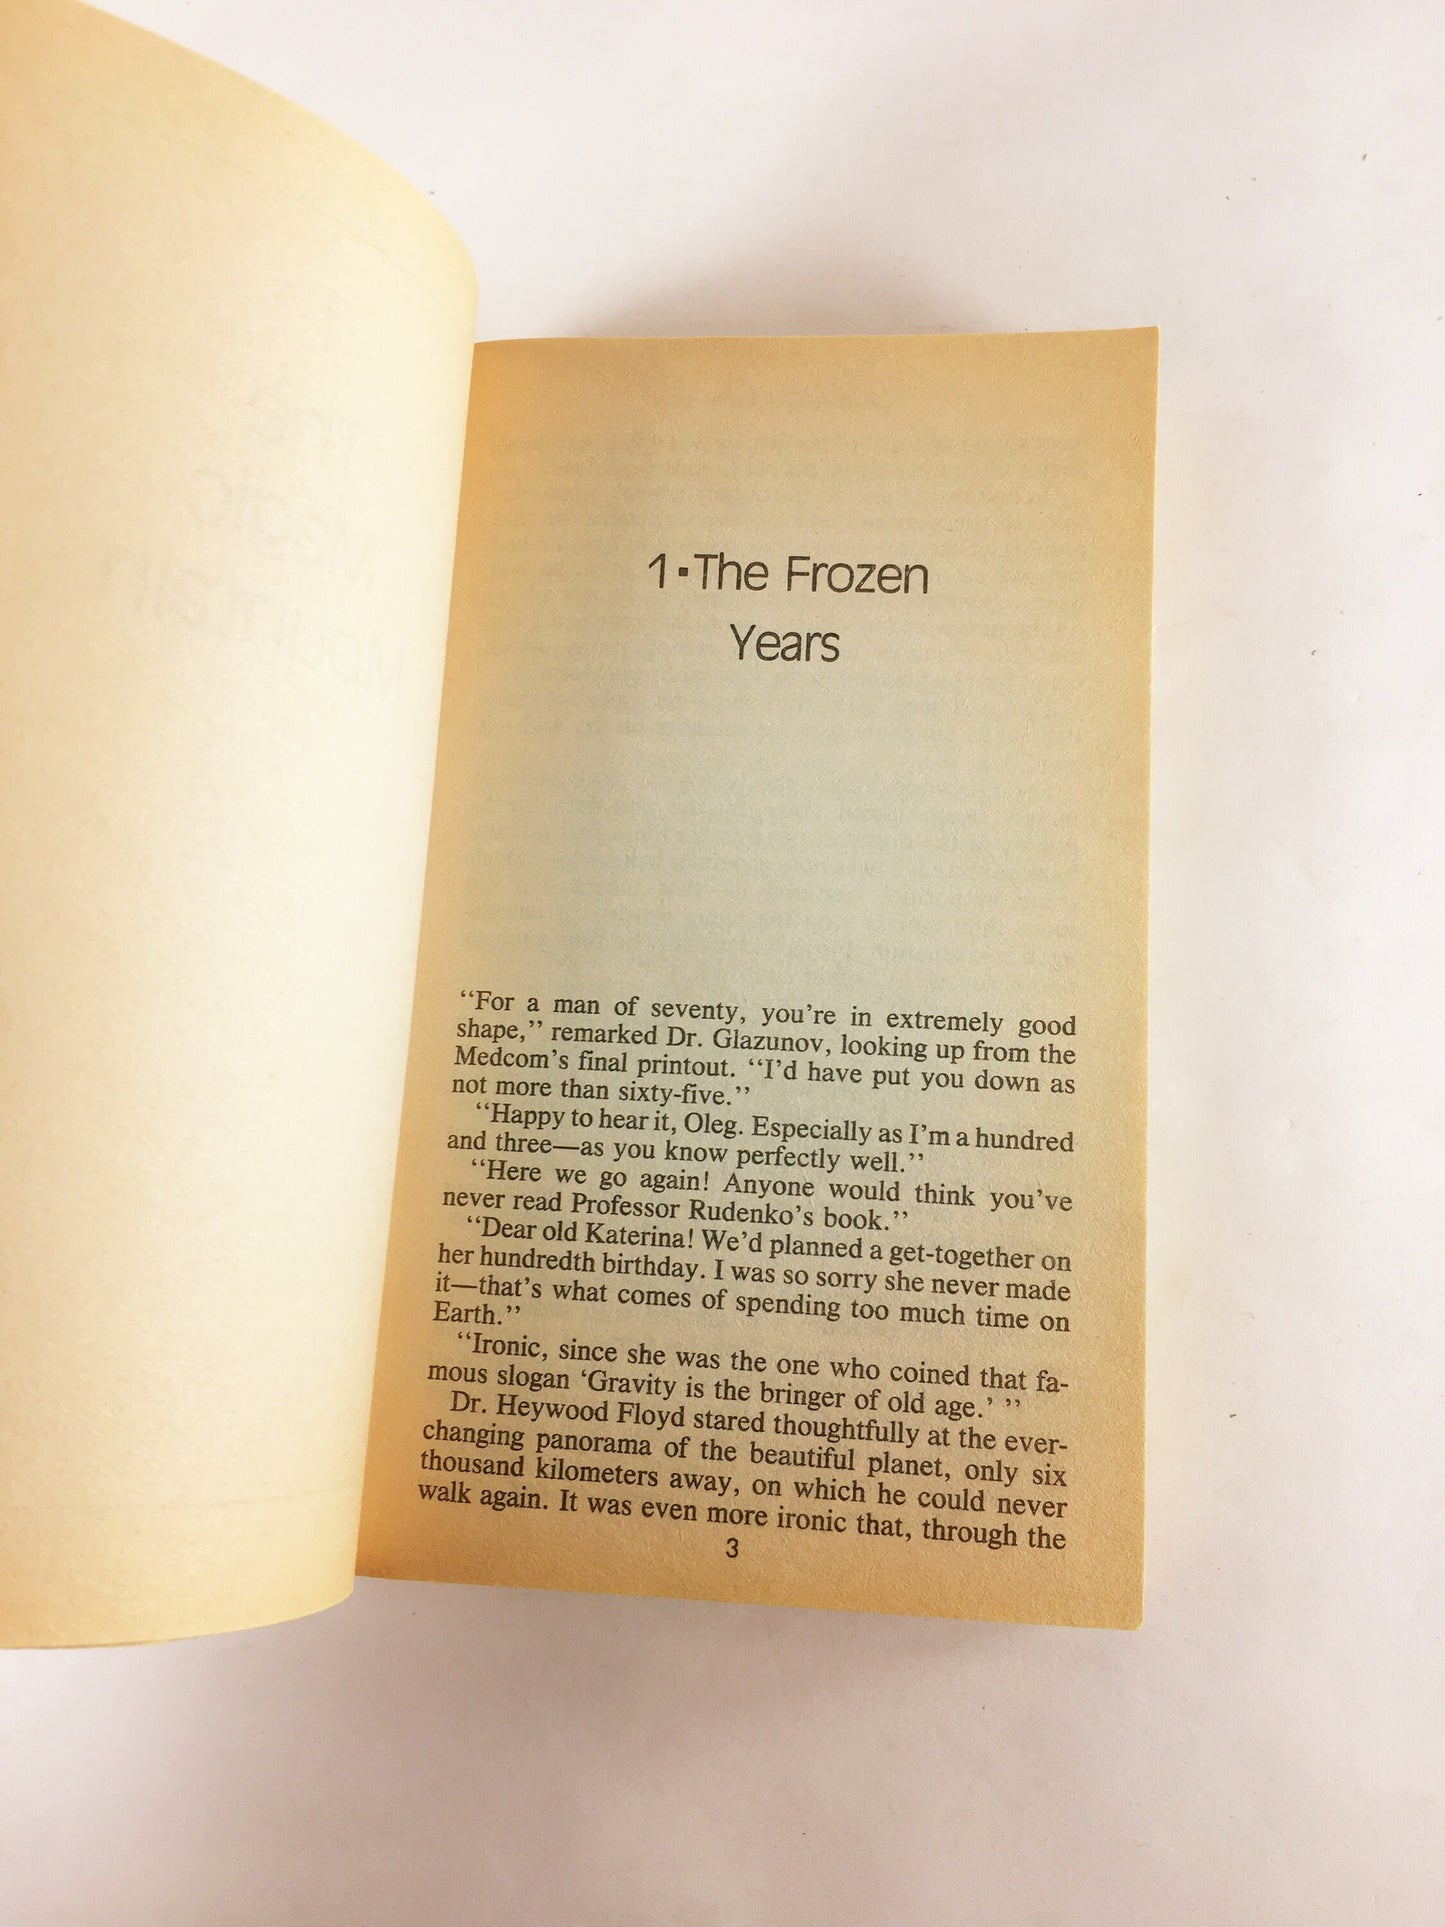 Arthur C Clarke 2061 Space Odyssey Three Vintage paperback book circa 1989. FIRST Mass PRINTING science fiction Nebula & Hugo awards